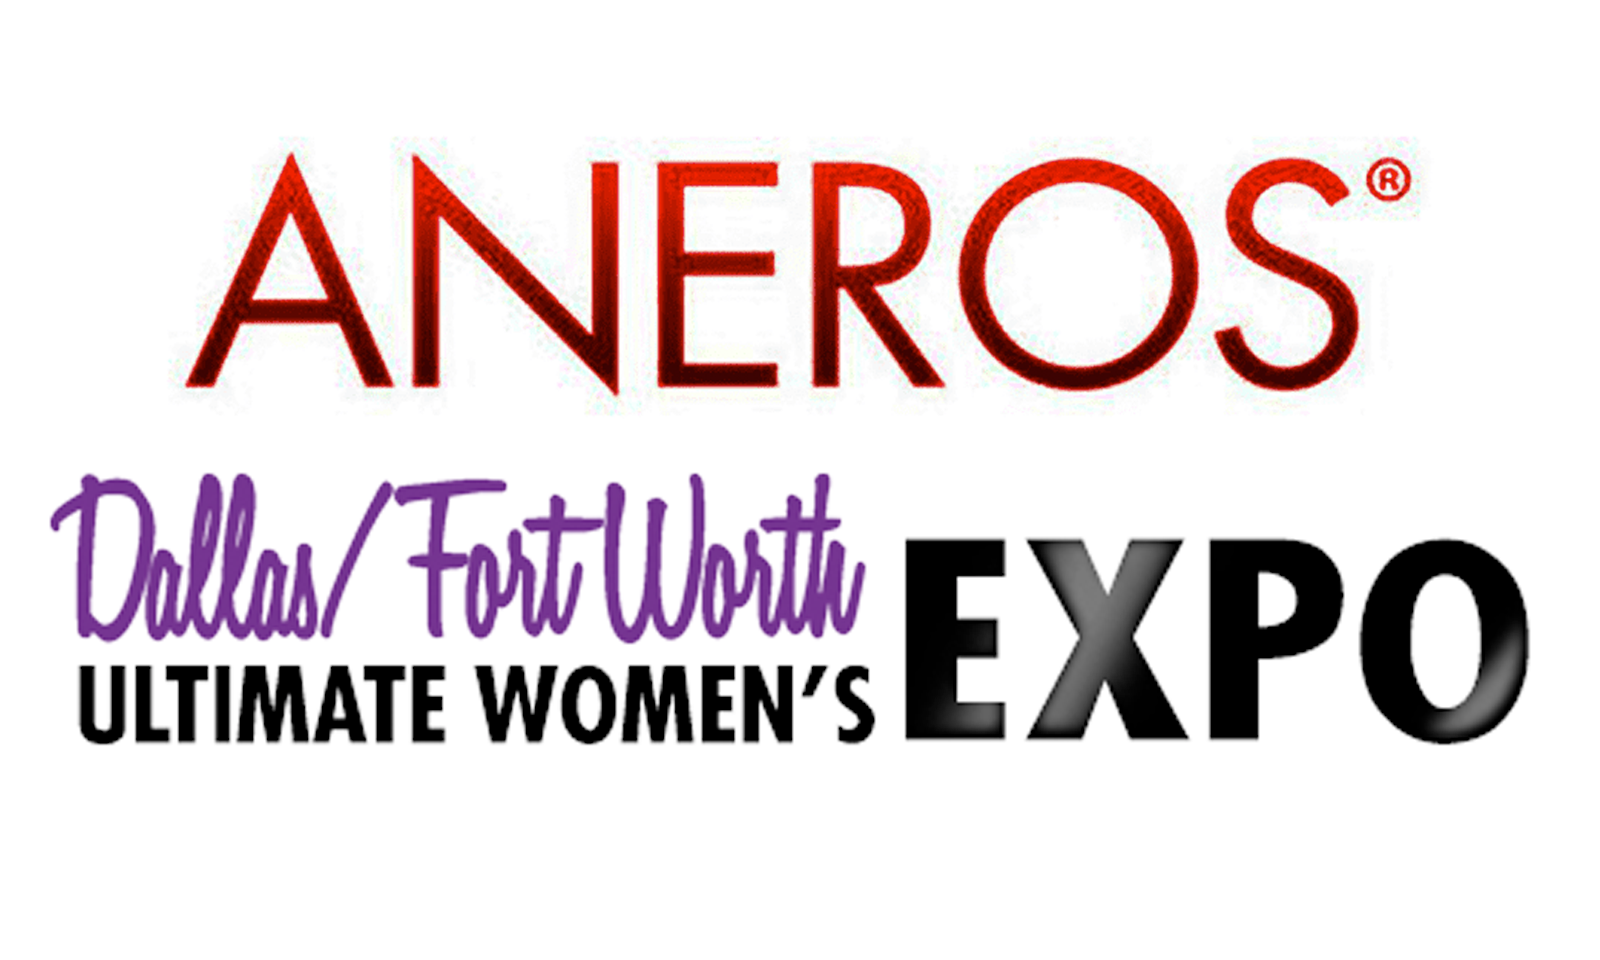 Aneros Exhibiting at Women's Health Expo in Dallas, Invites Media